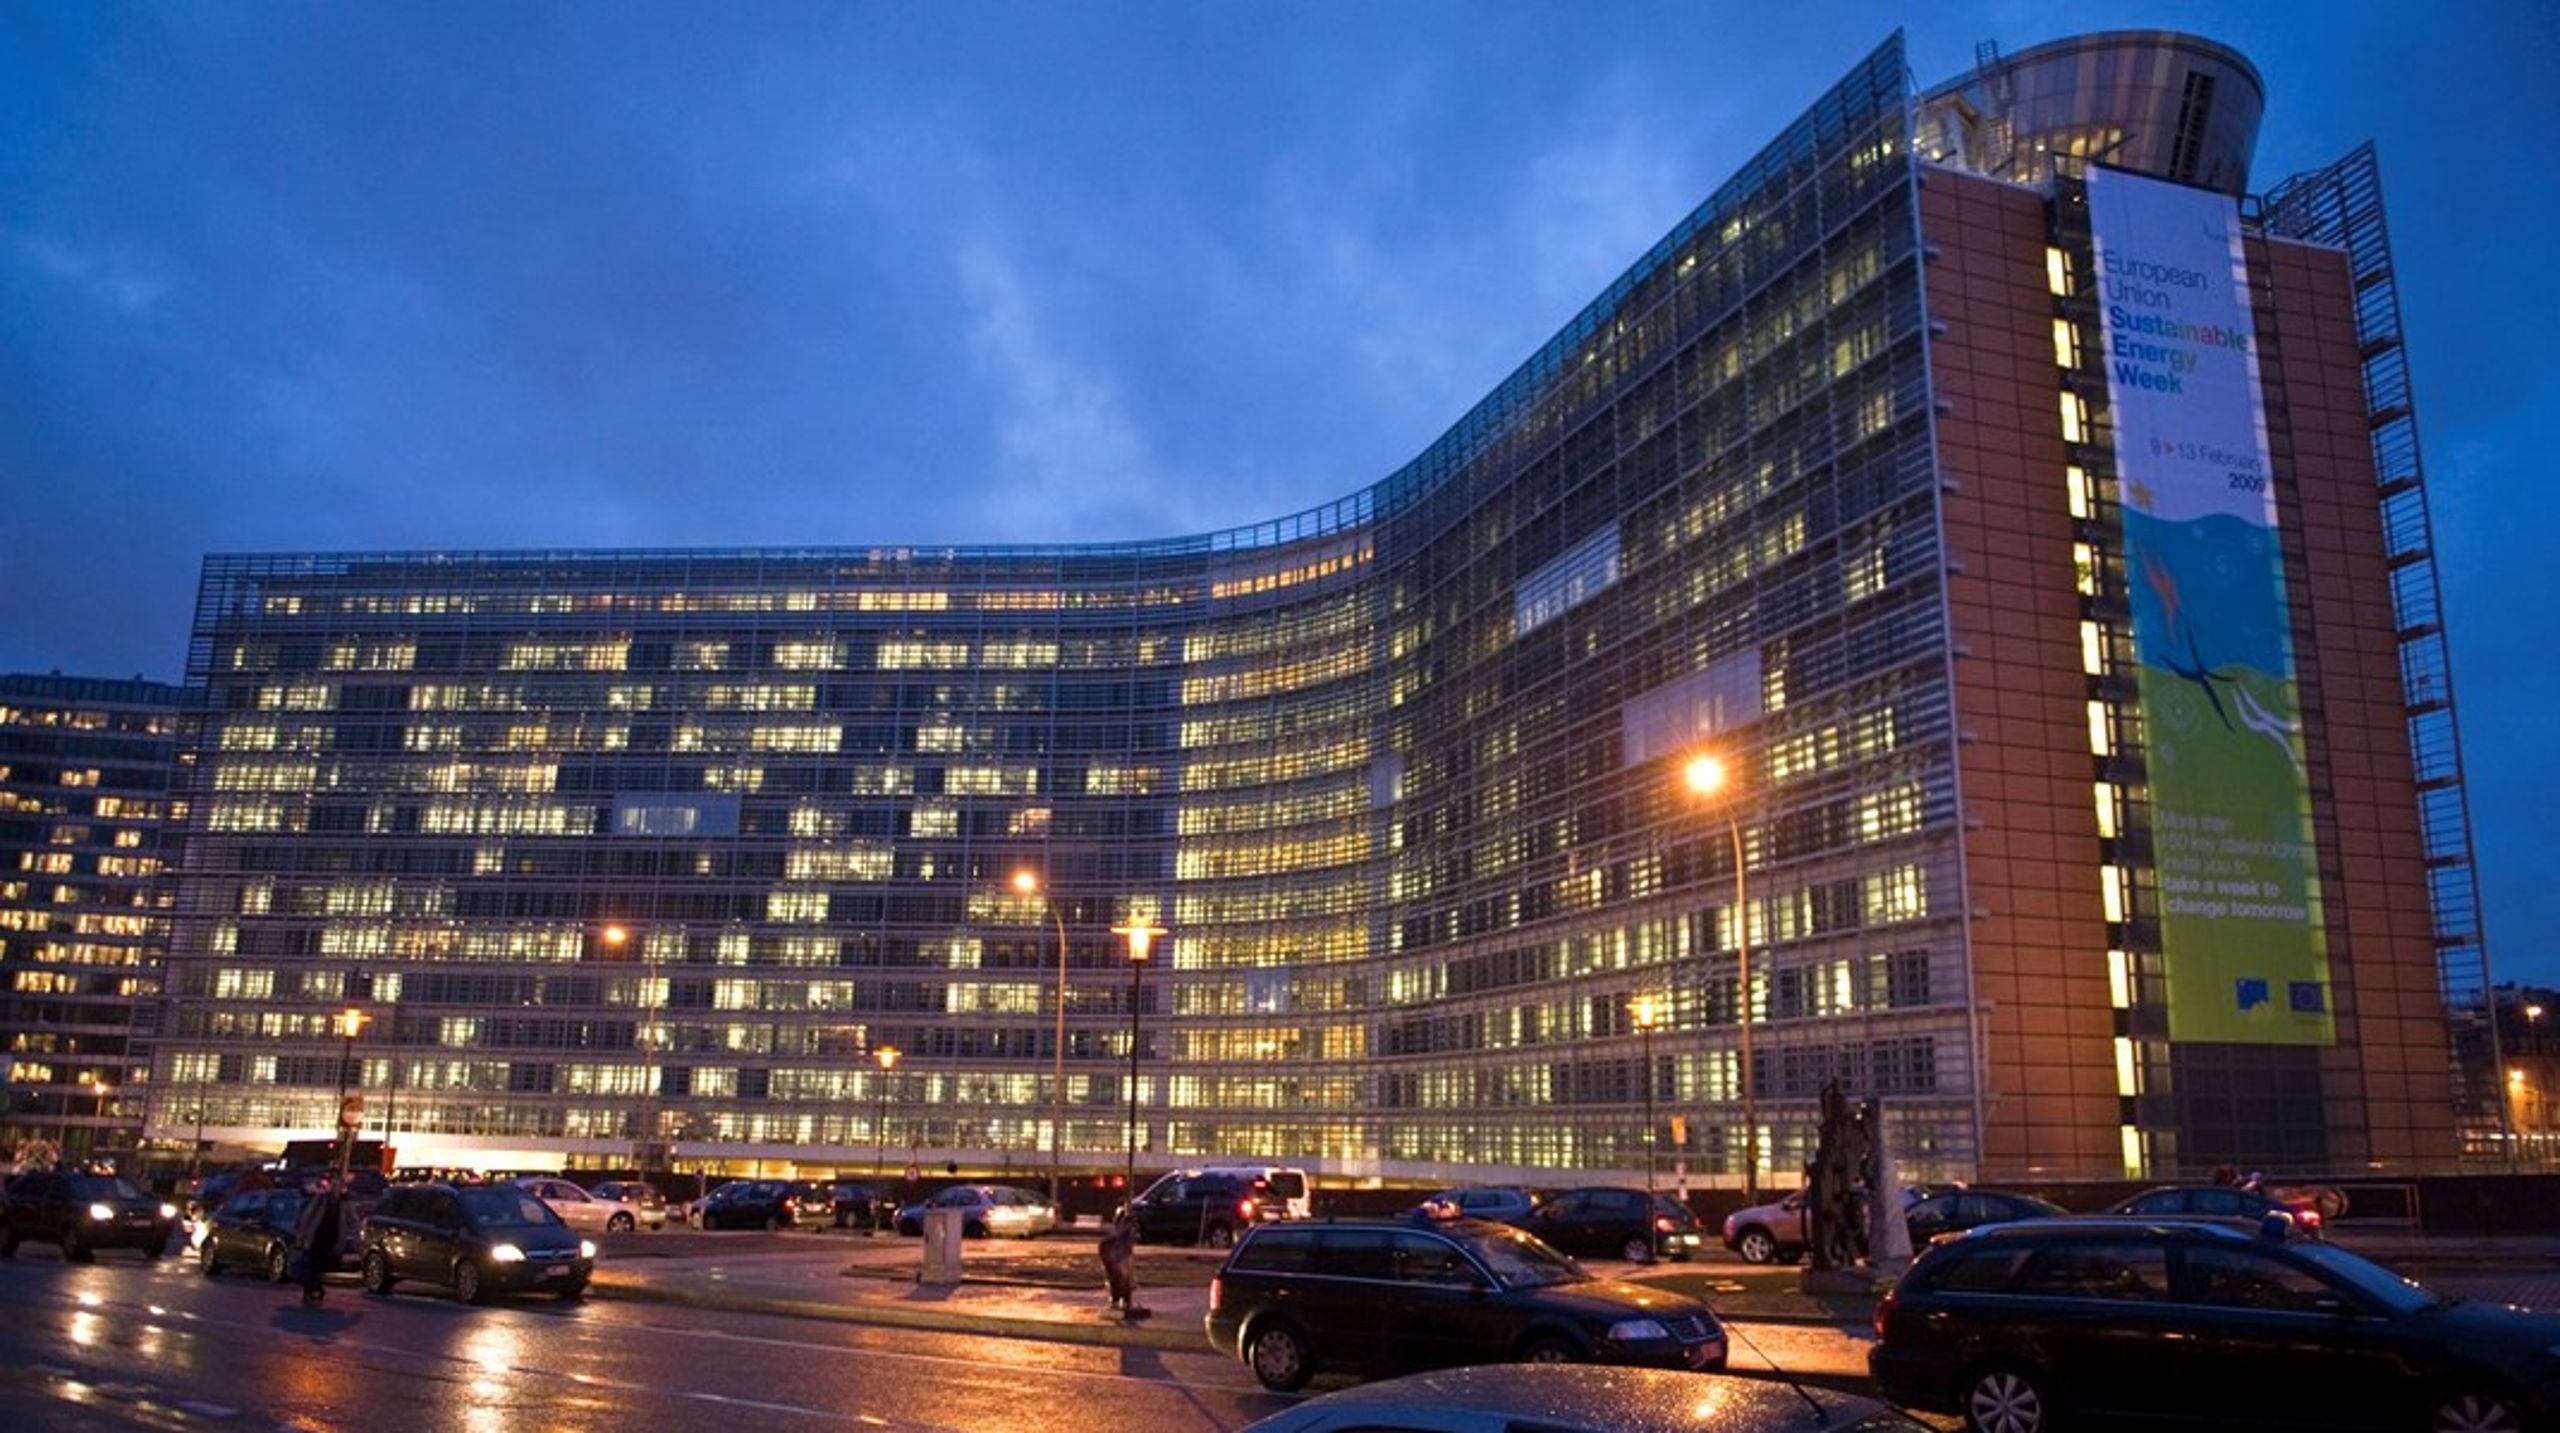 EU-kommissionens byggnad Berlaymont i Bryssel.